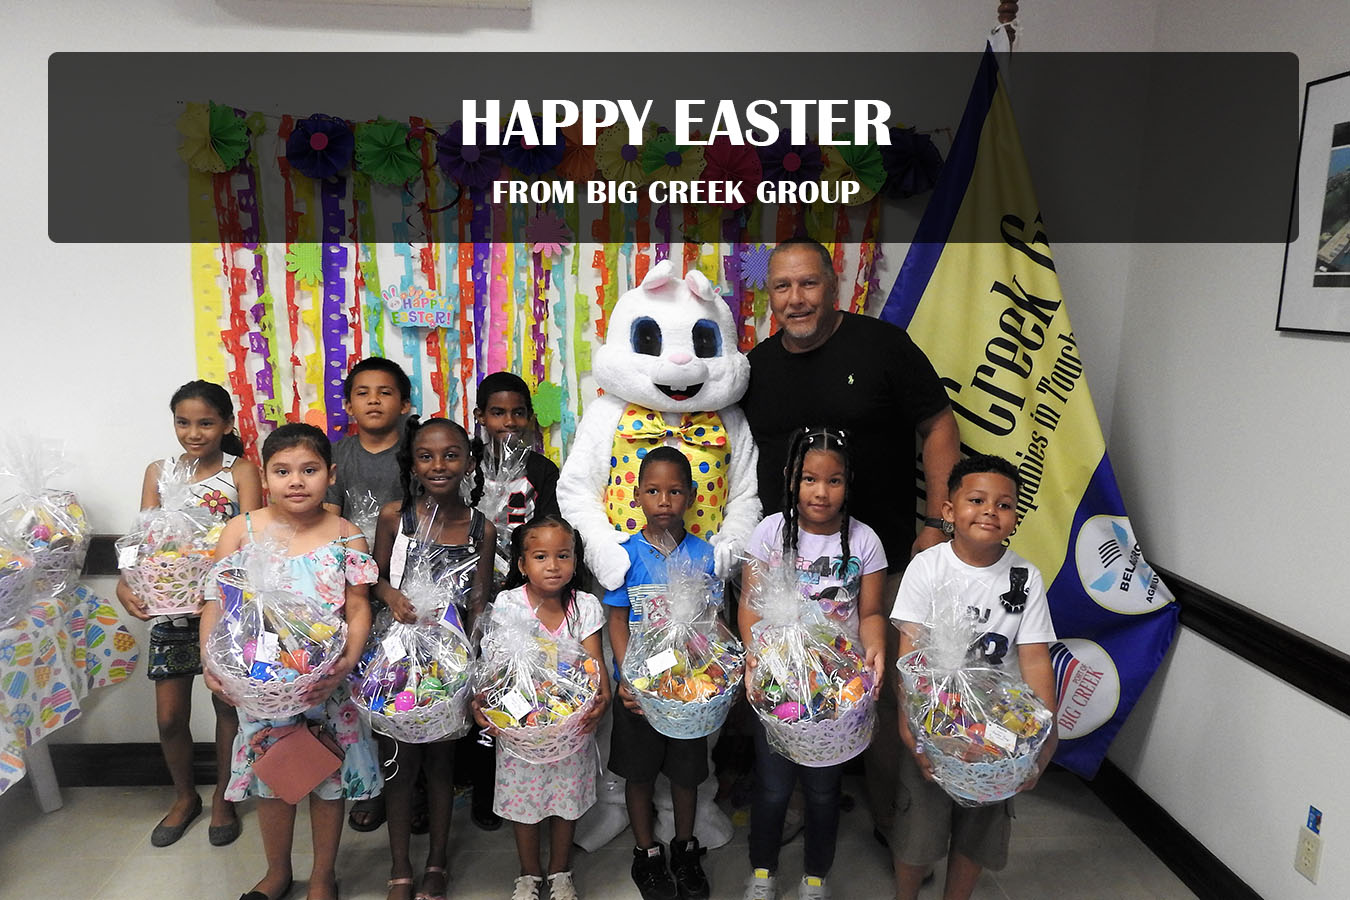 Celebrating Easter at Big Creek Group